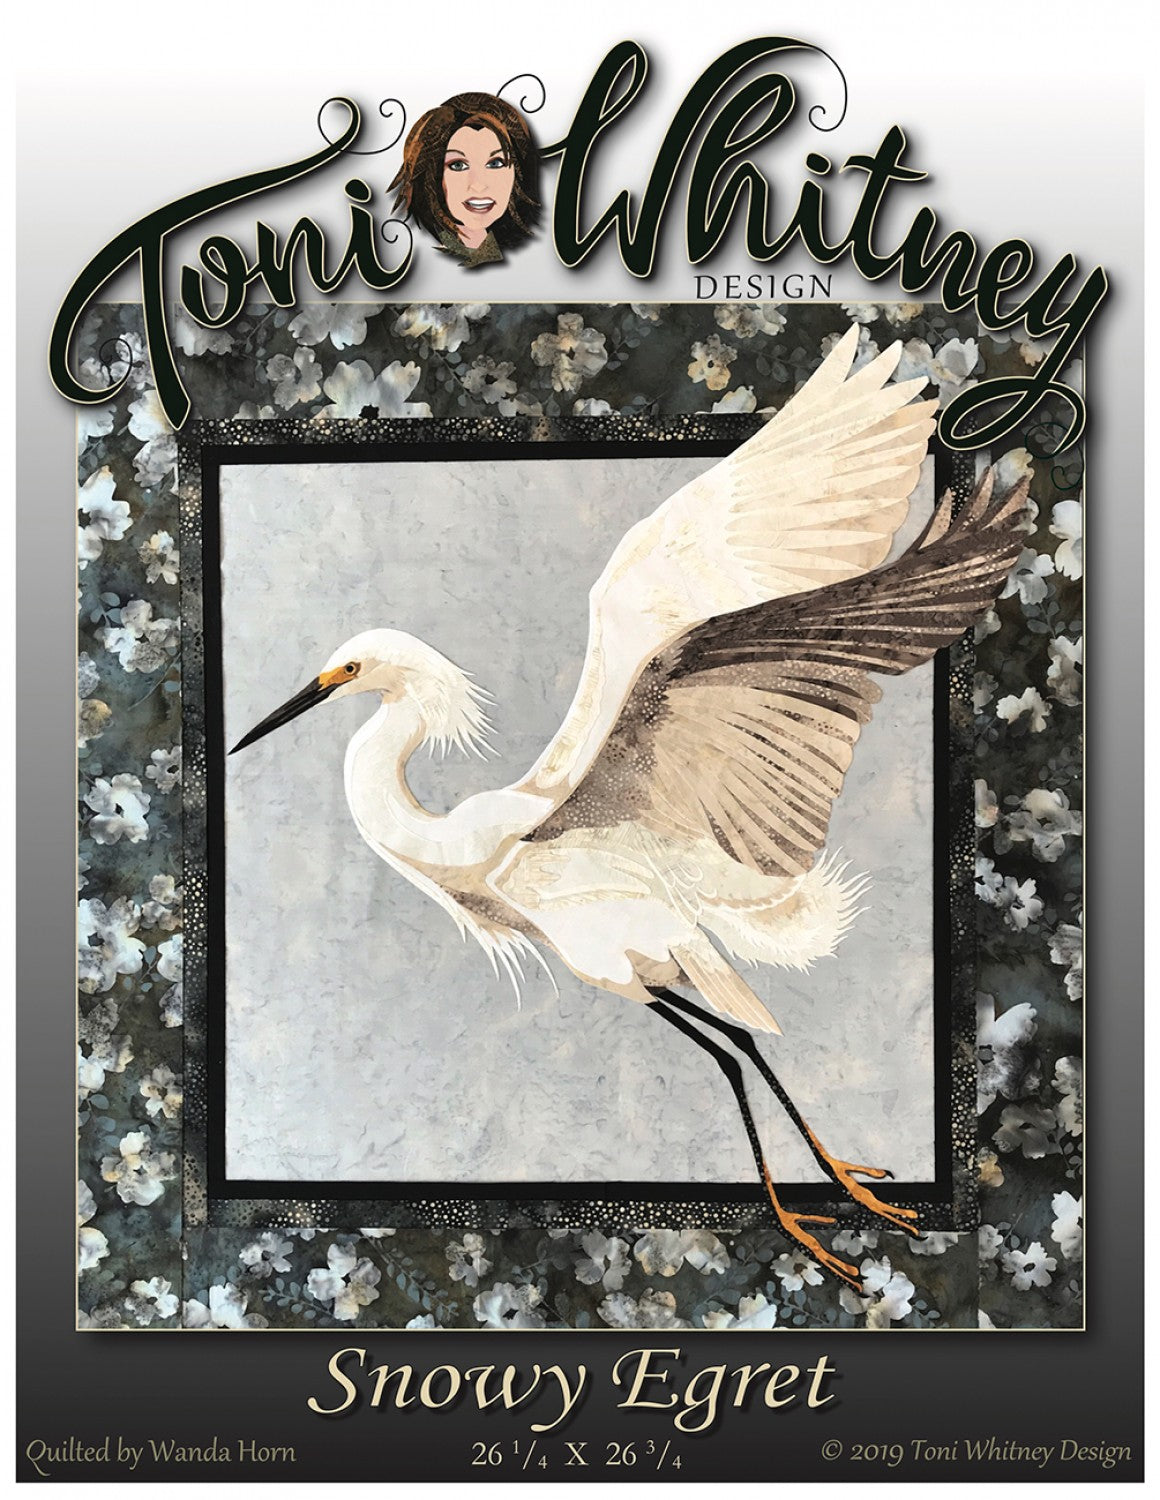 Toni Whitney Design Snowy Egret Bird Applique Quilt Pattern Front Cover